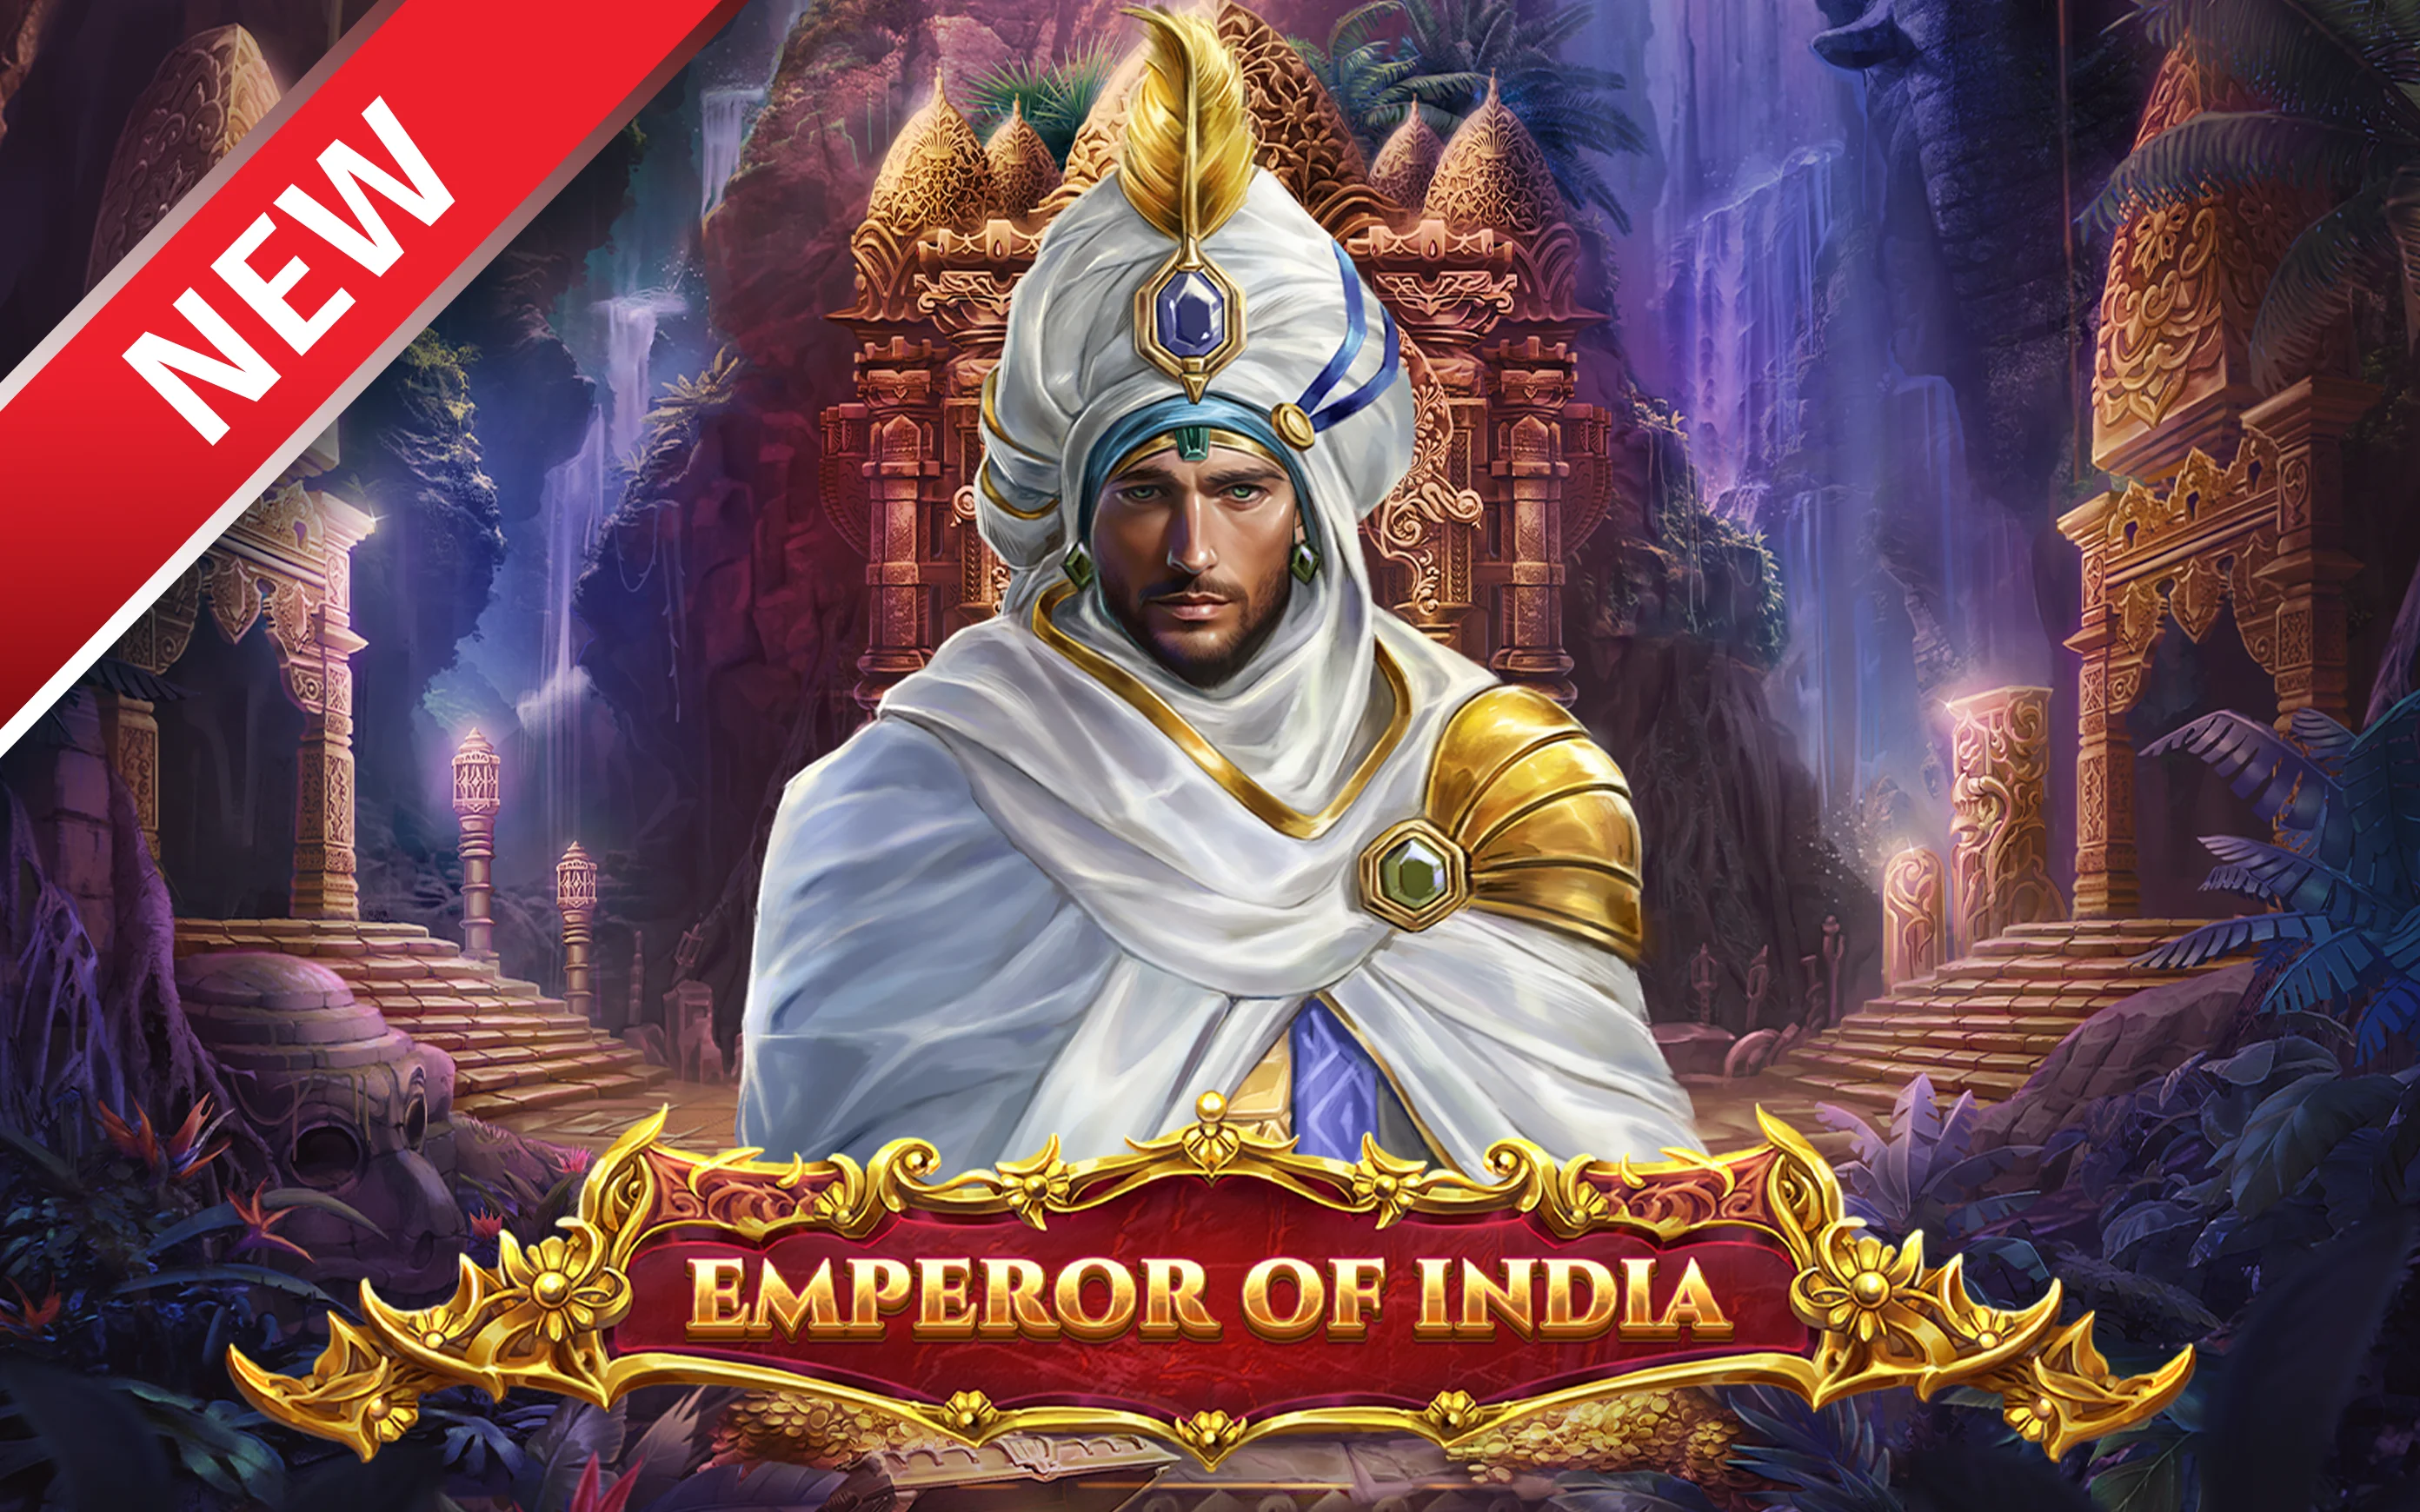 Play Emperor of India on Starcasino.be online casino